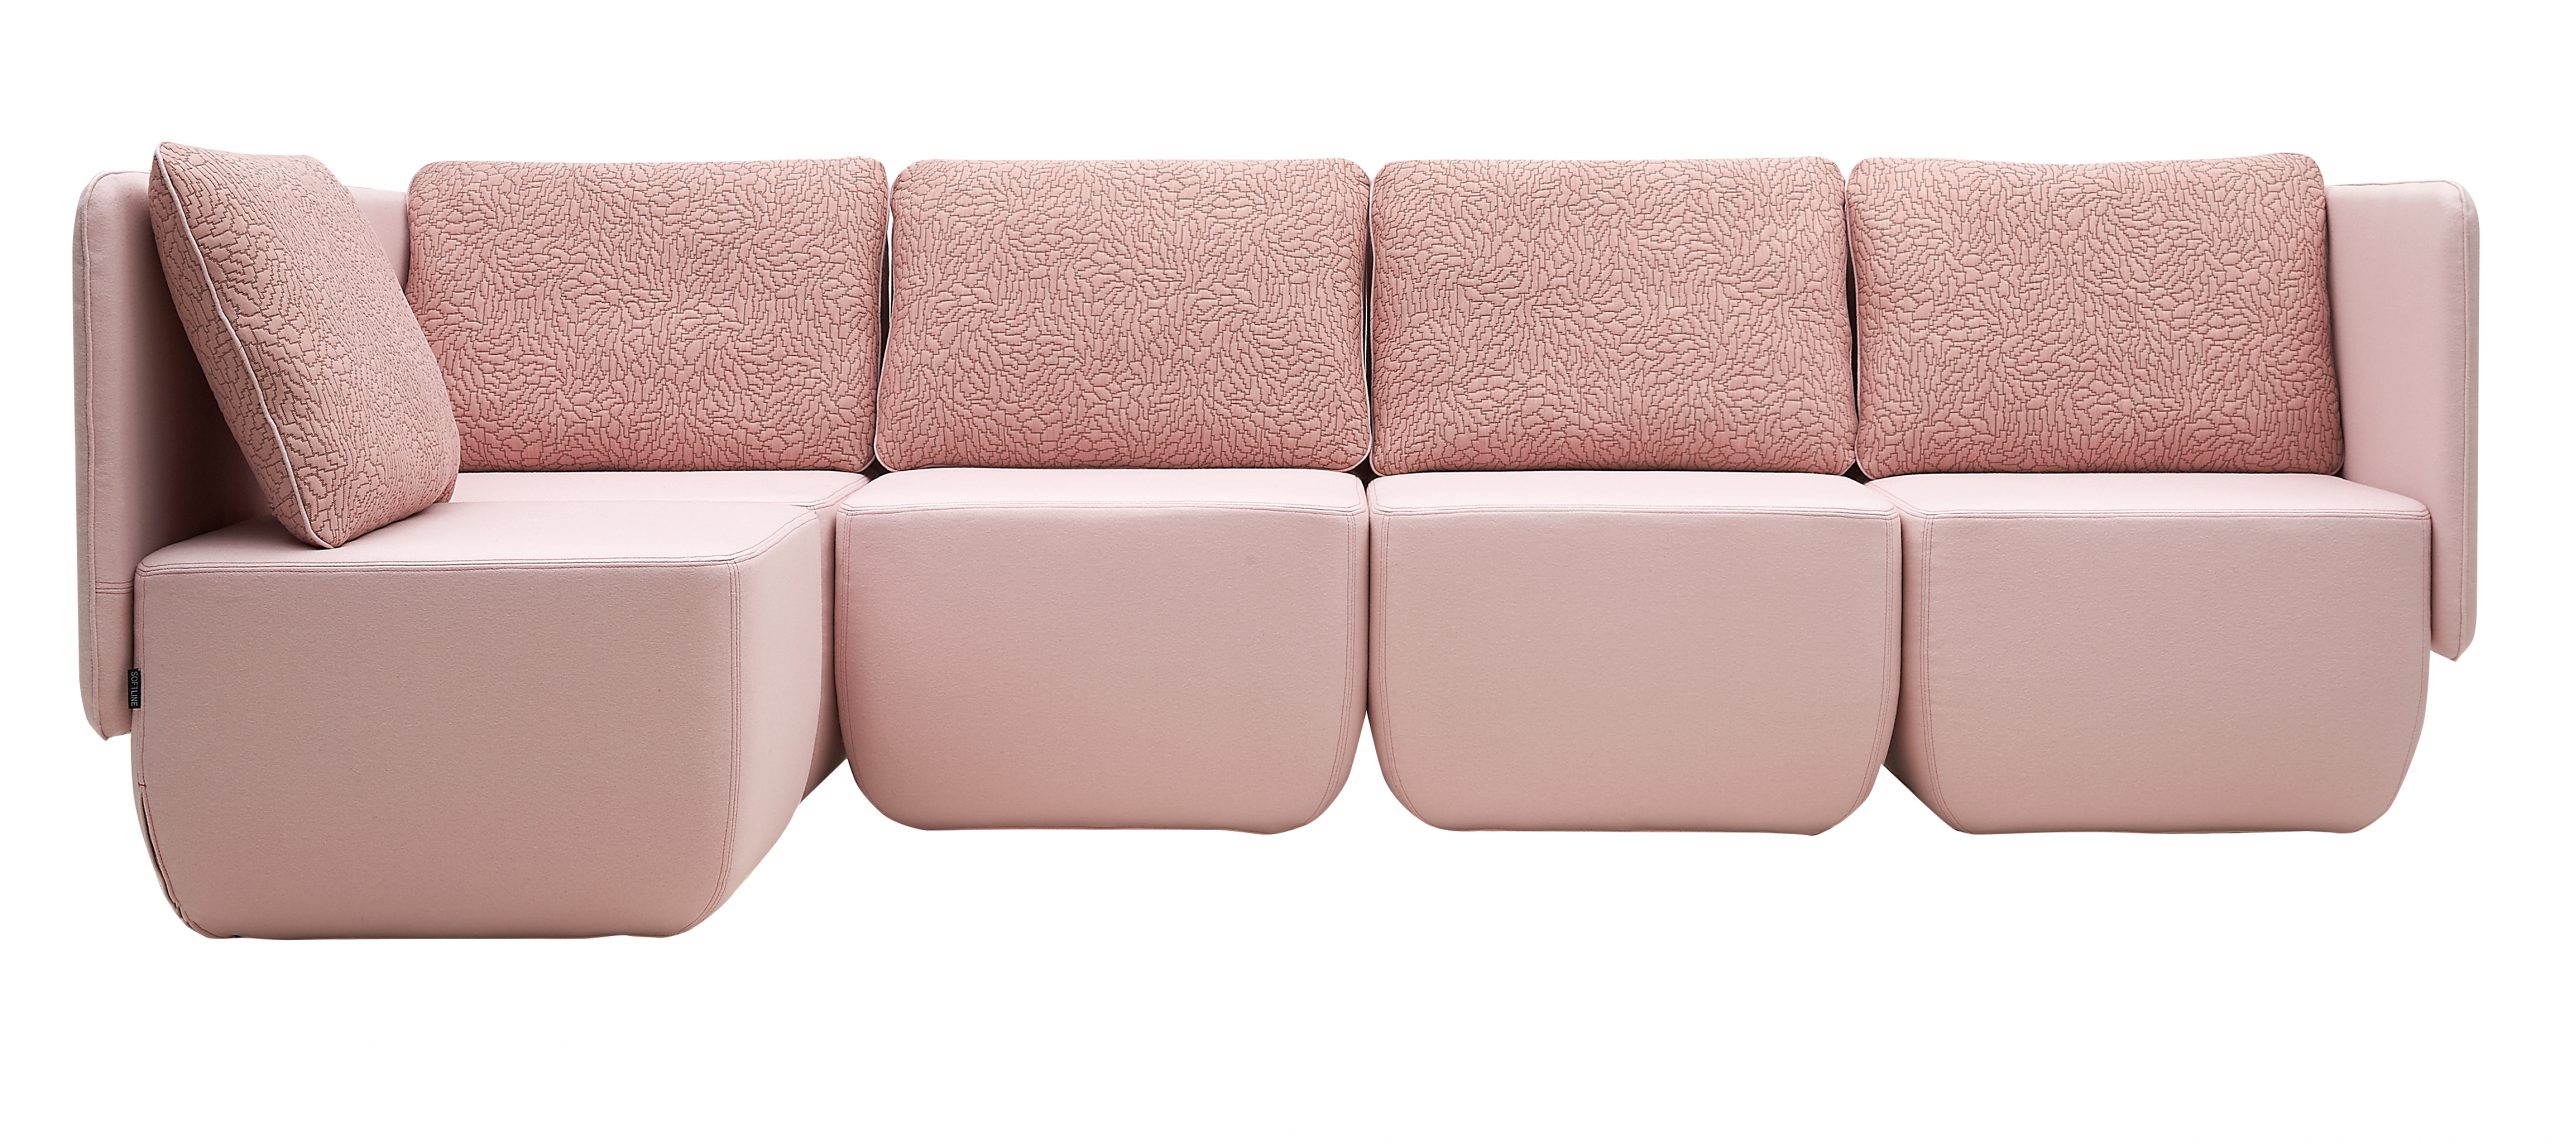 opera-modular-sofa-high-res-16-scaled.jpg